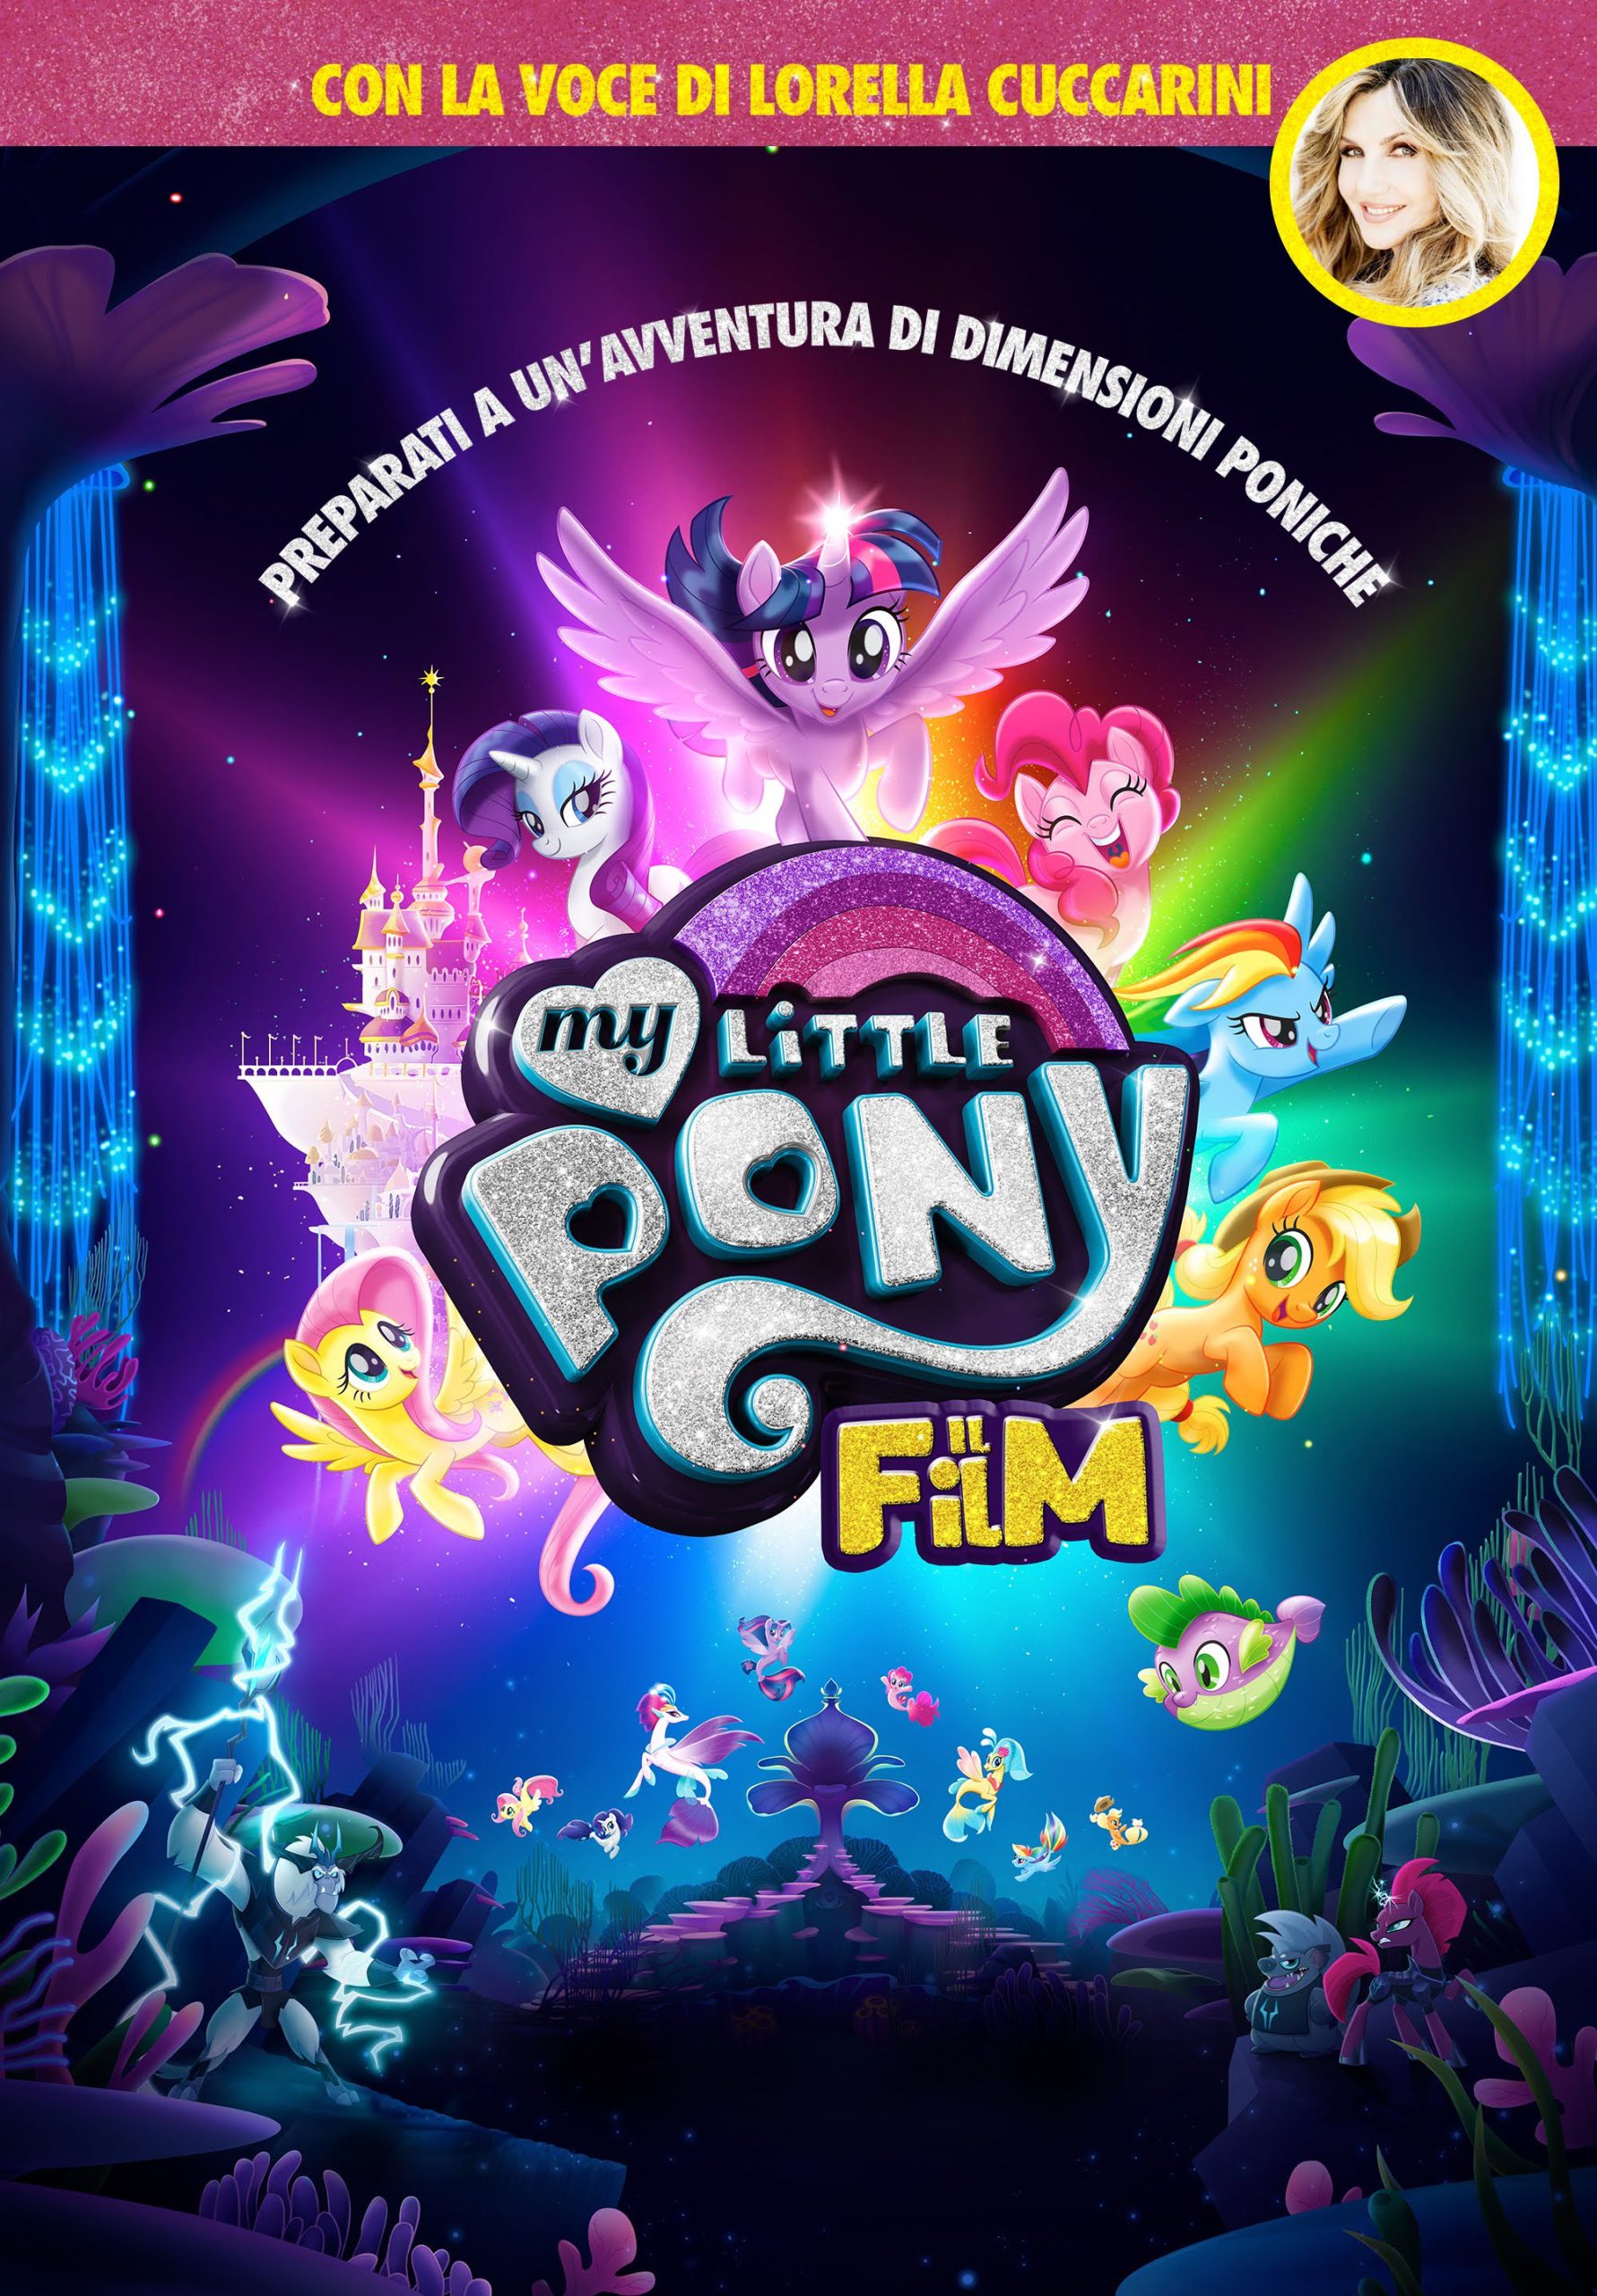 My Little Pony: Il film [HD] (2017)